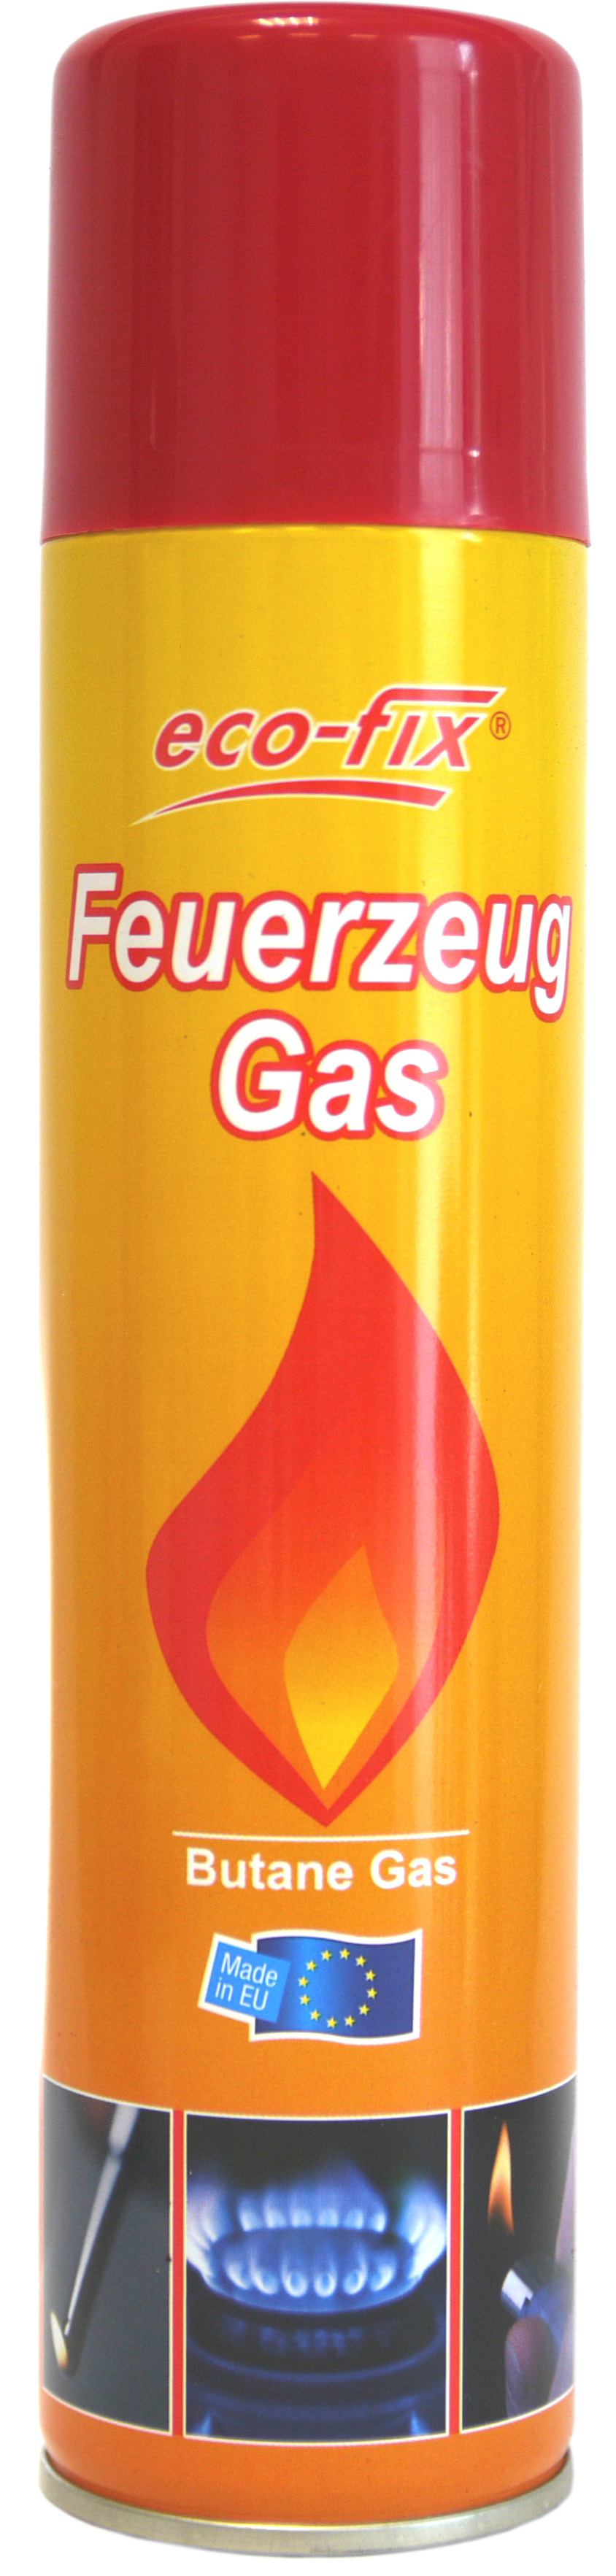 20001 - ecofix Feuerzeug Gas 300 ml